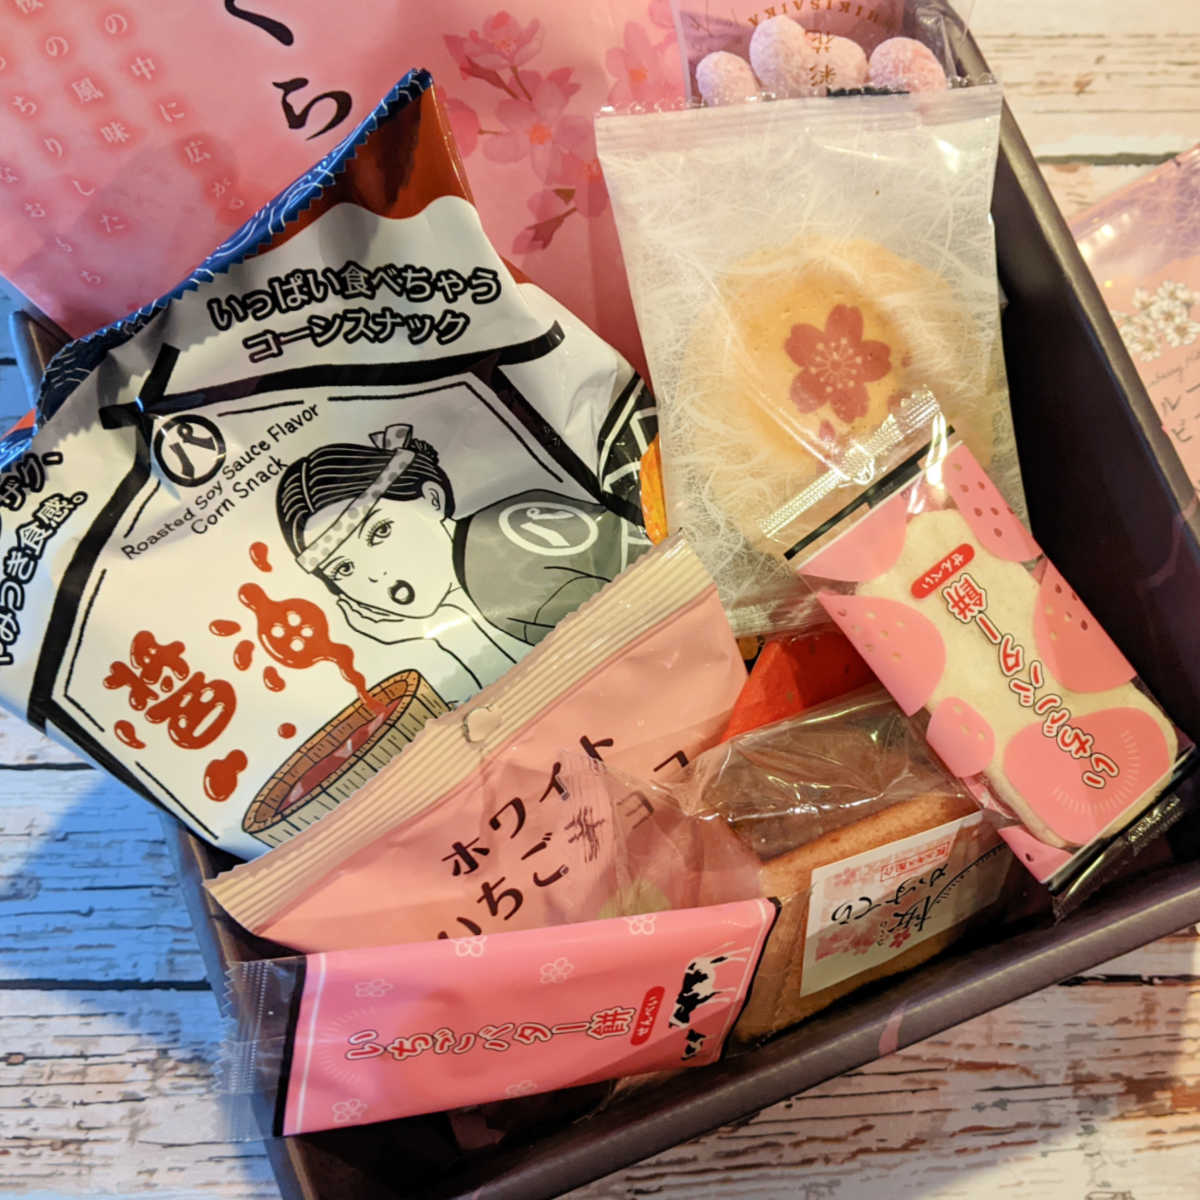 artisinal sakuraco box